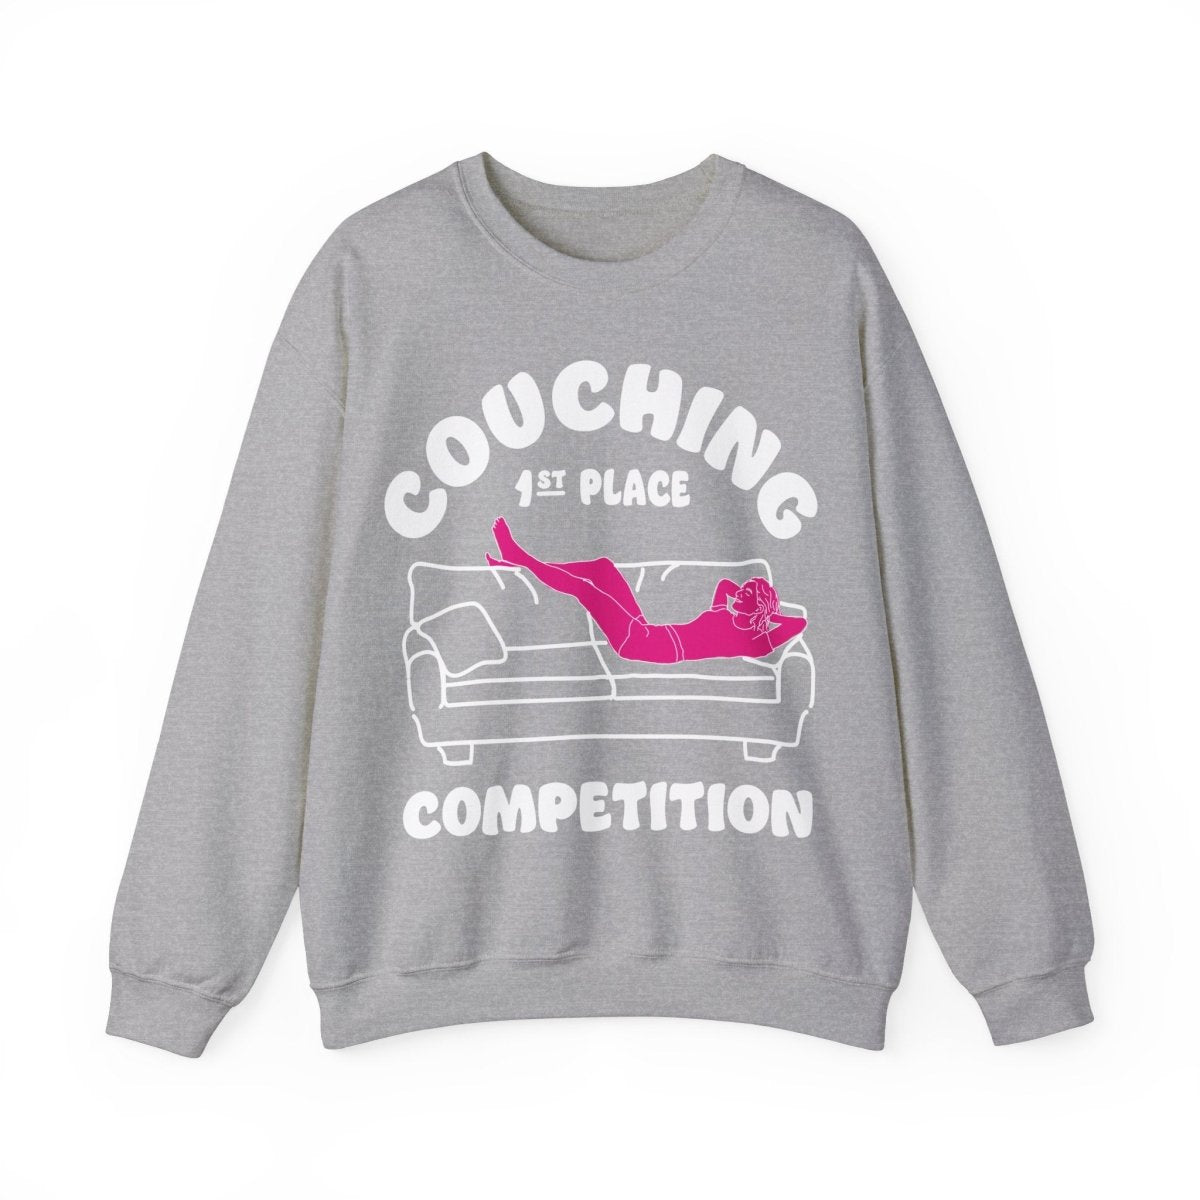 Couching Competitor Fleece Sweatshirt, Relaxing Inspiration, Funny, Couch Potato, Weekend